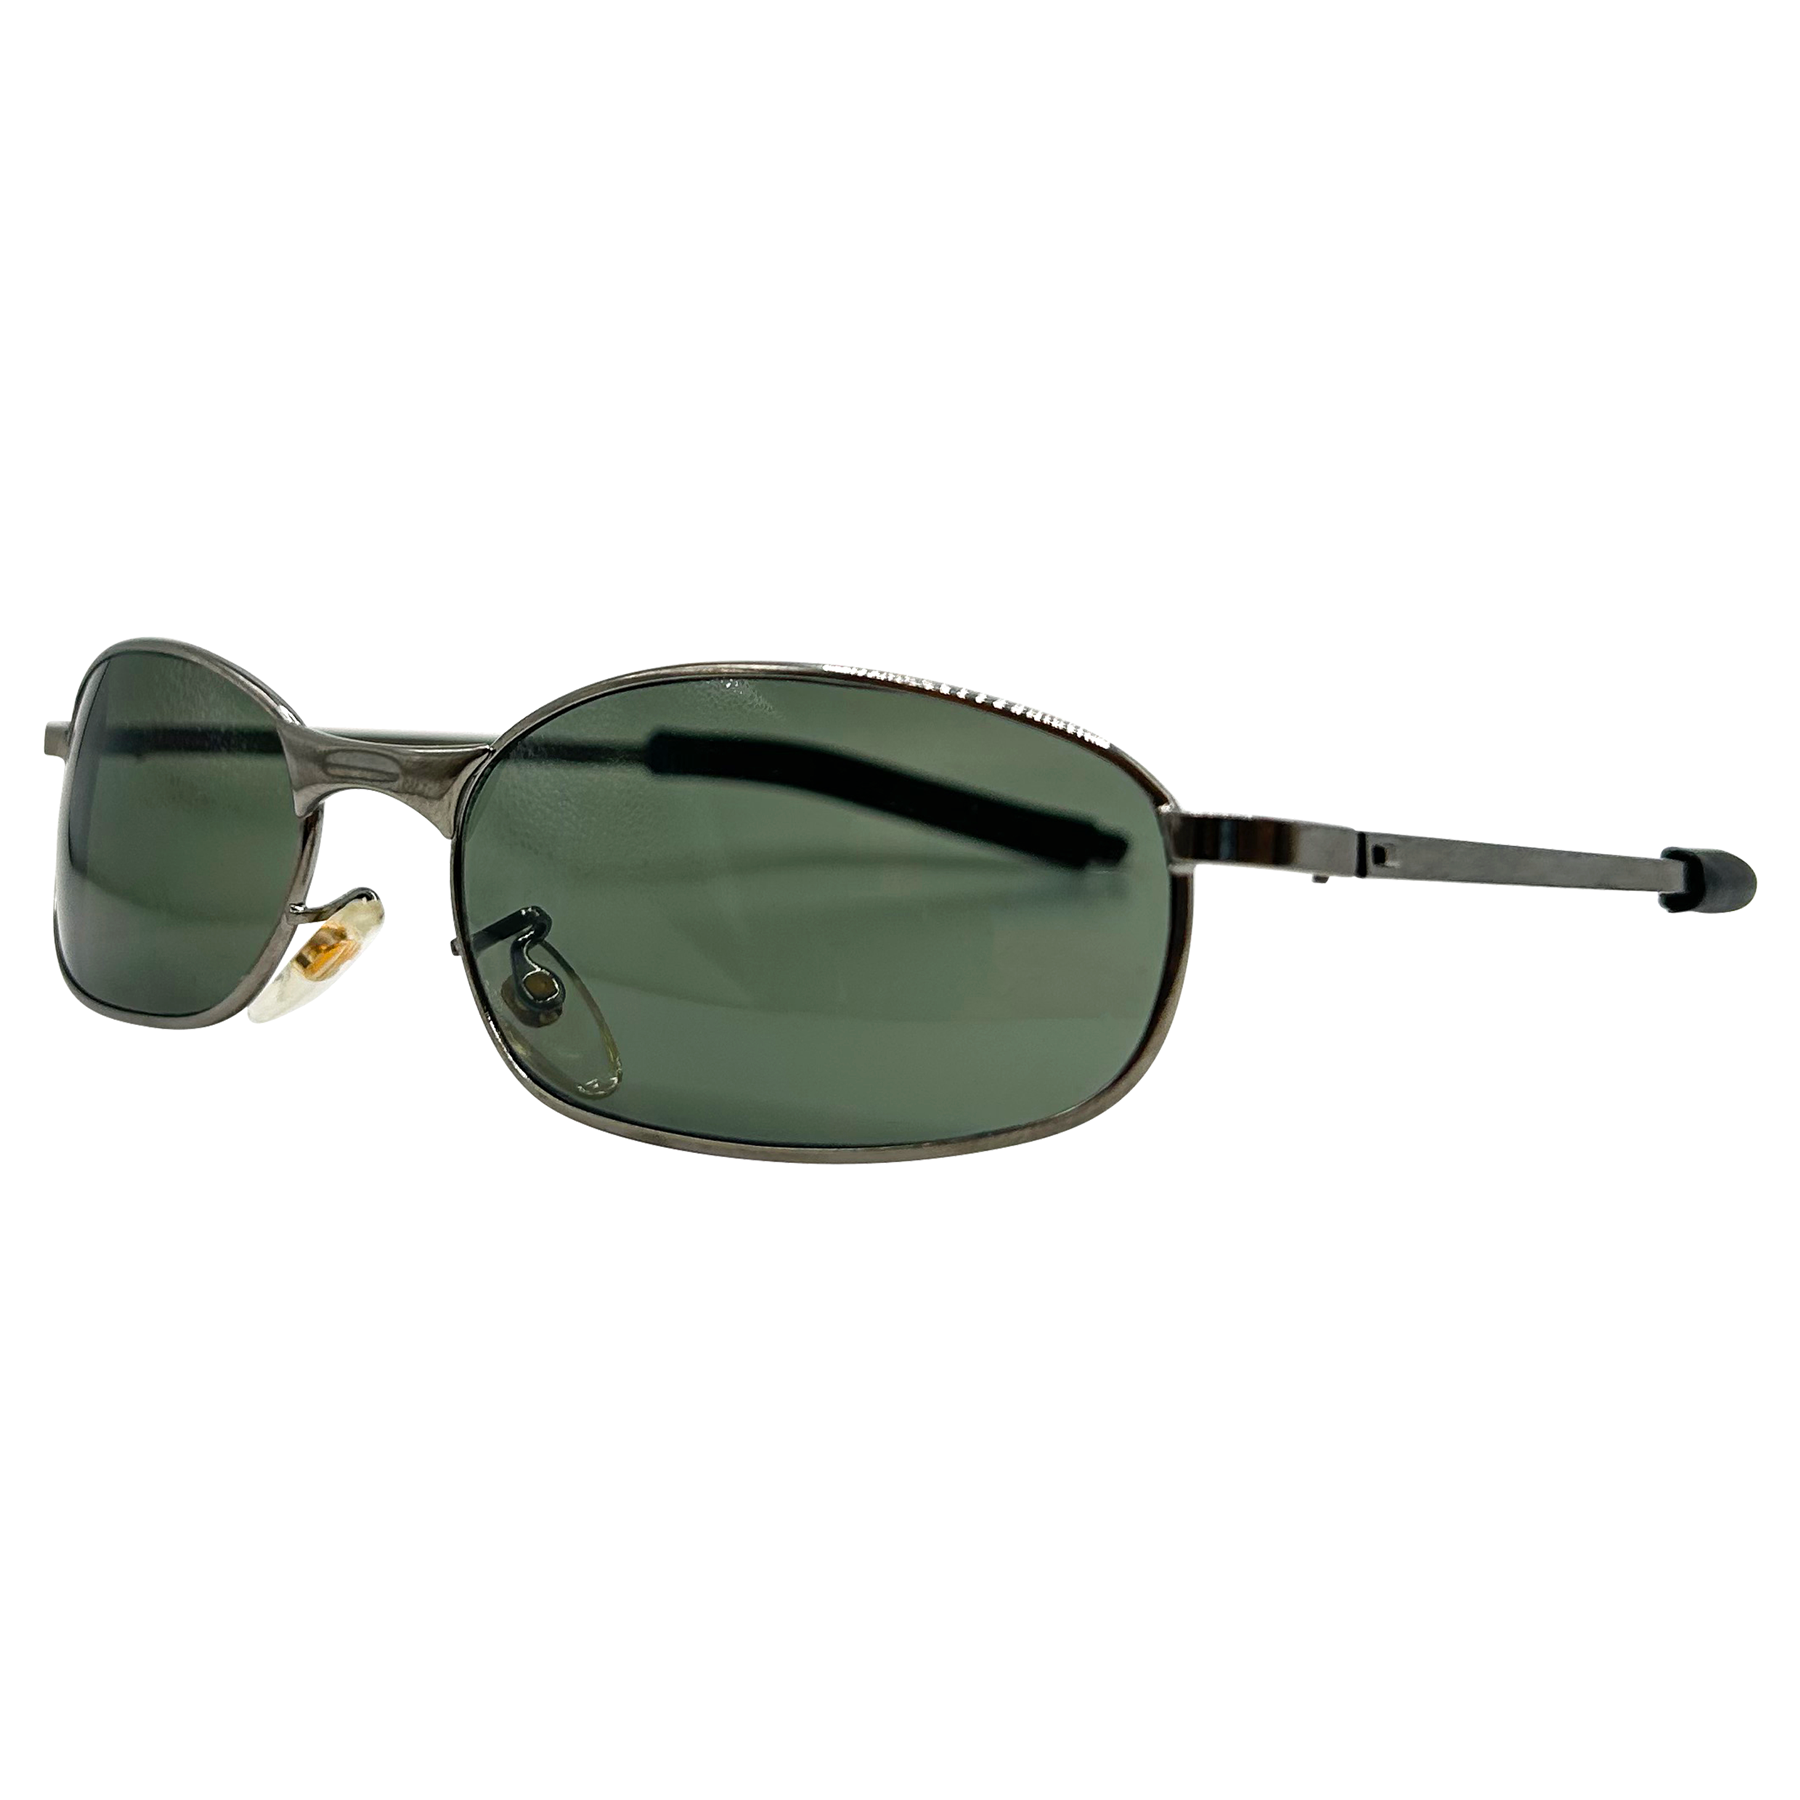 FELIX Oval Sports 90s Sunglasses